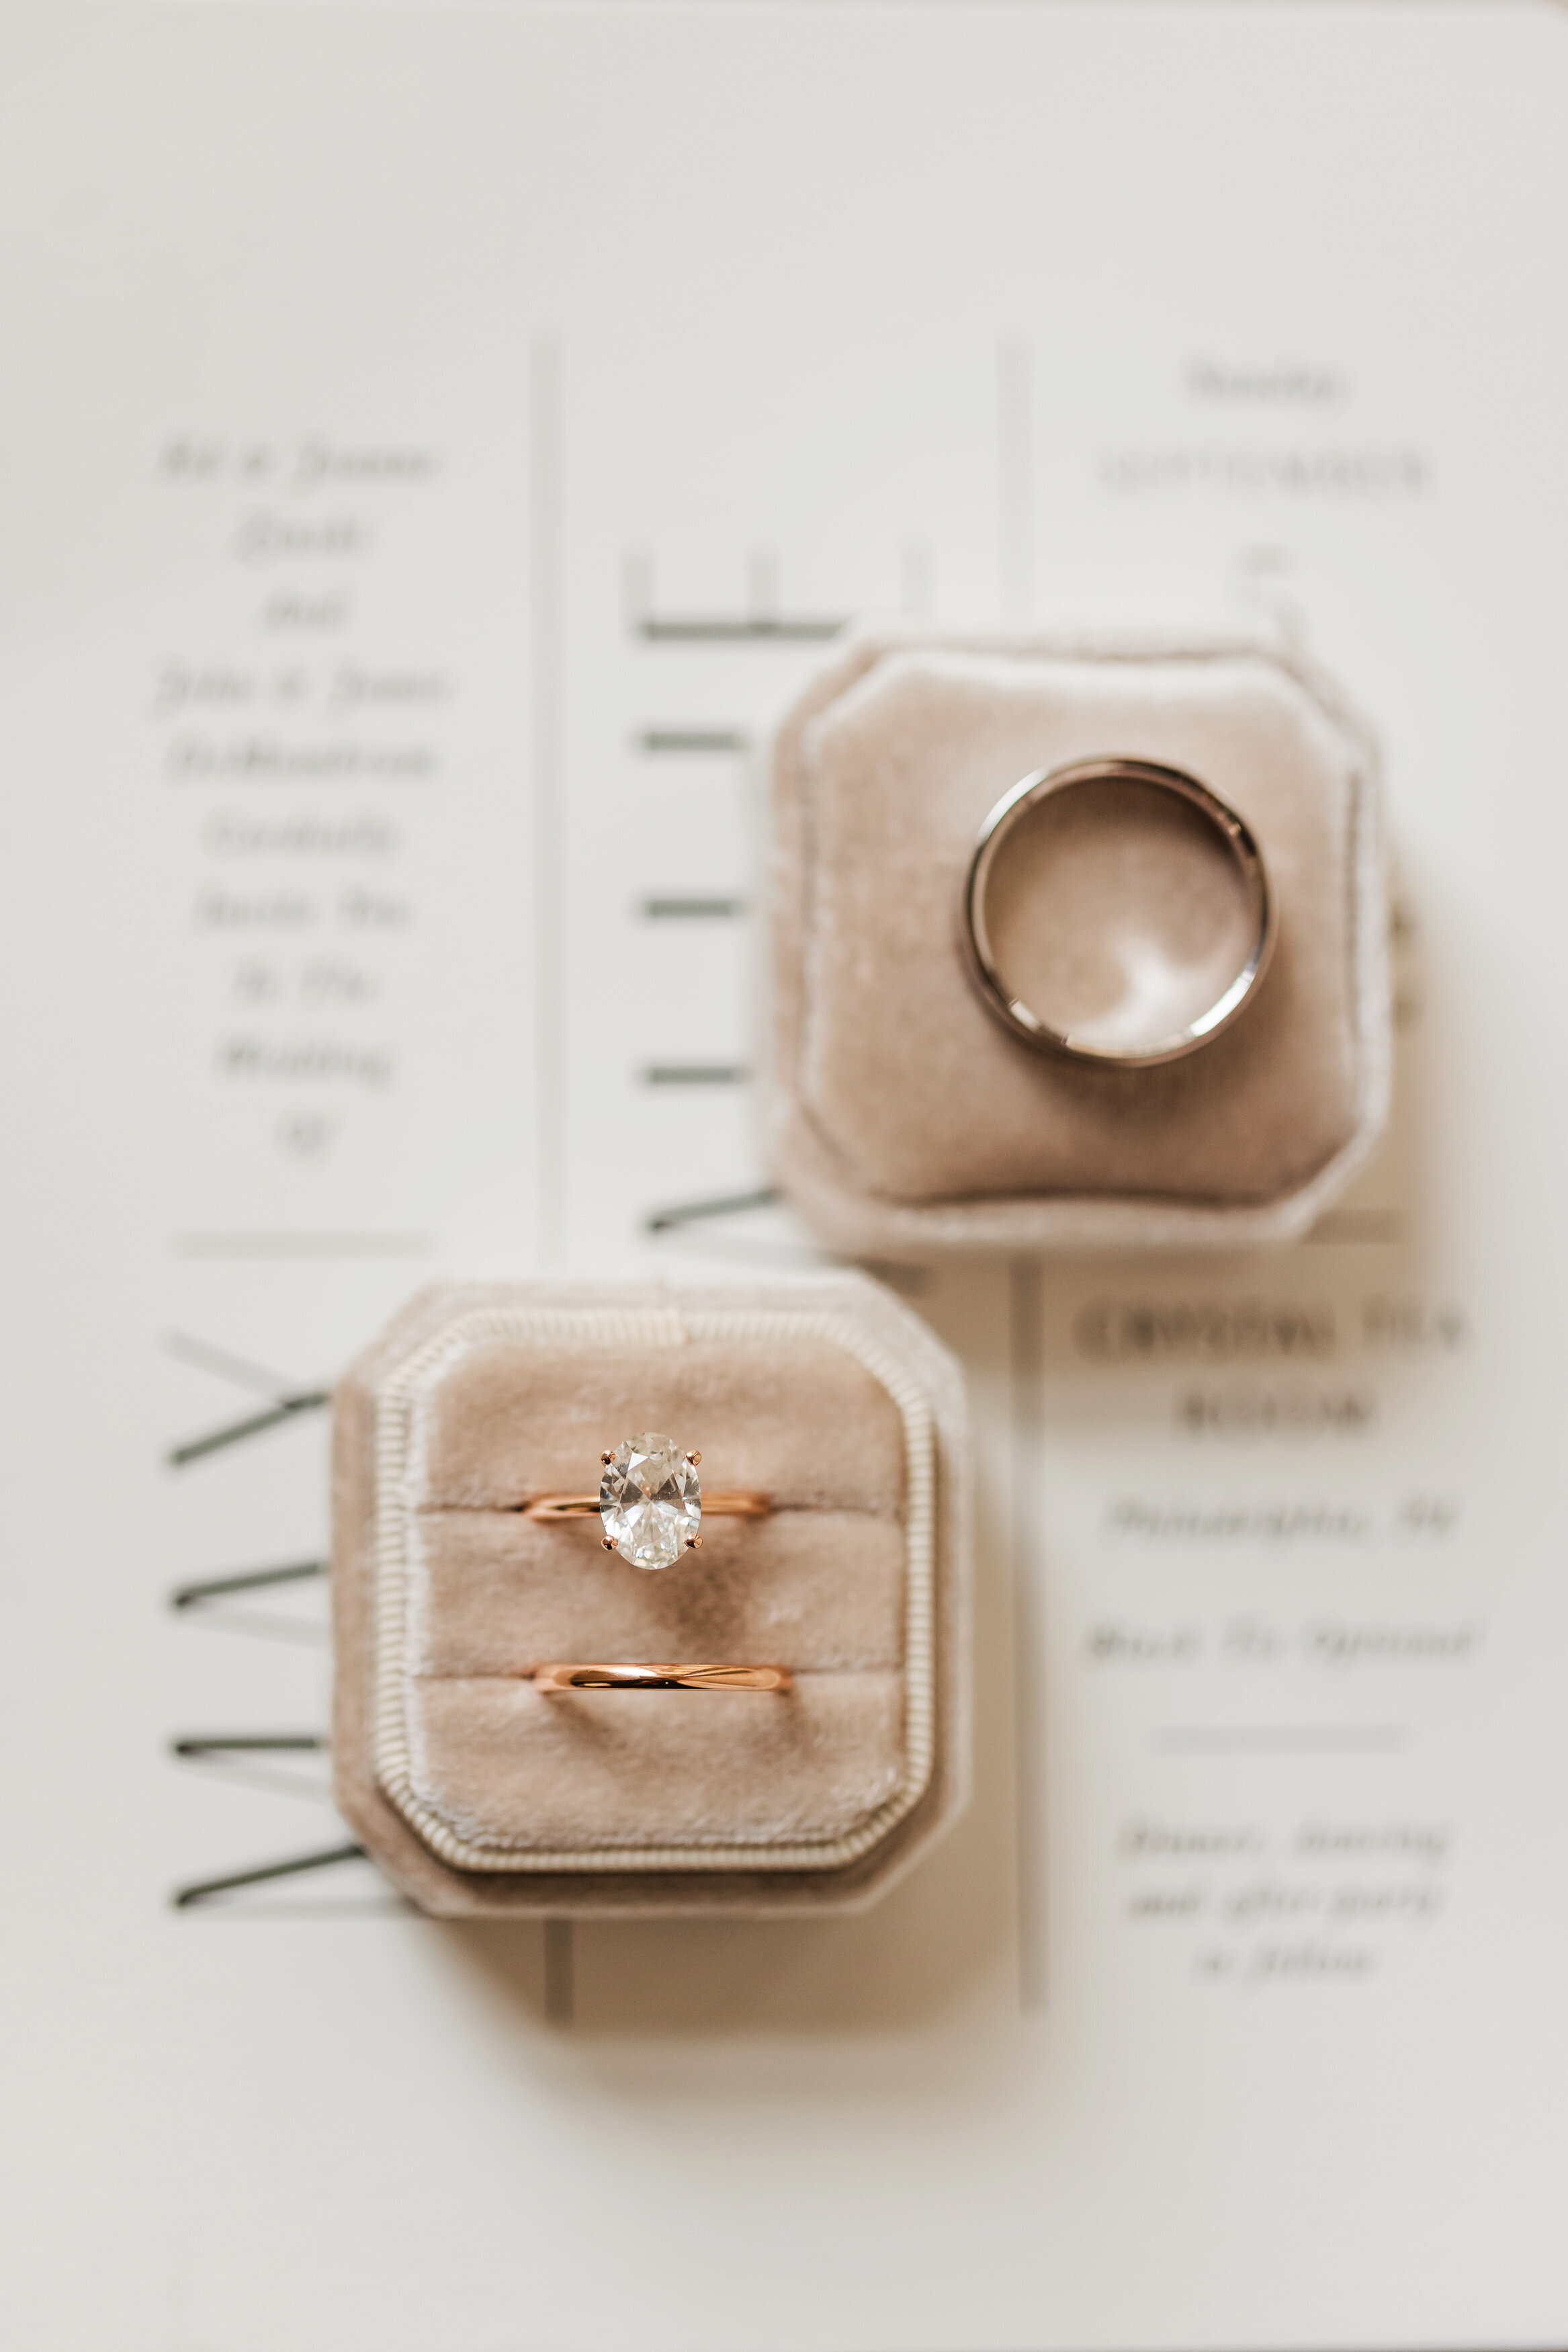 Rode gold wedding bands in a blush velvet ring box  captured at Crystal Tea Room